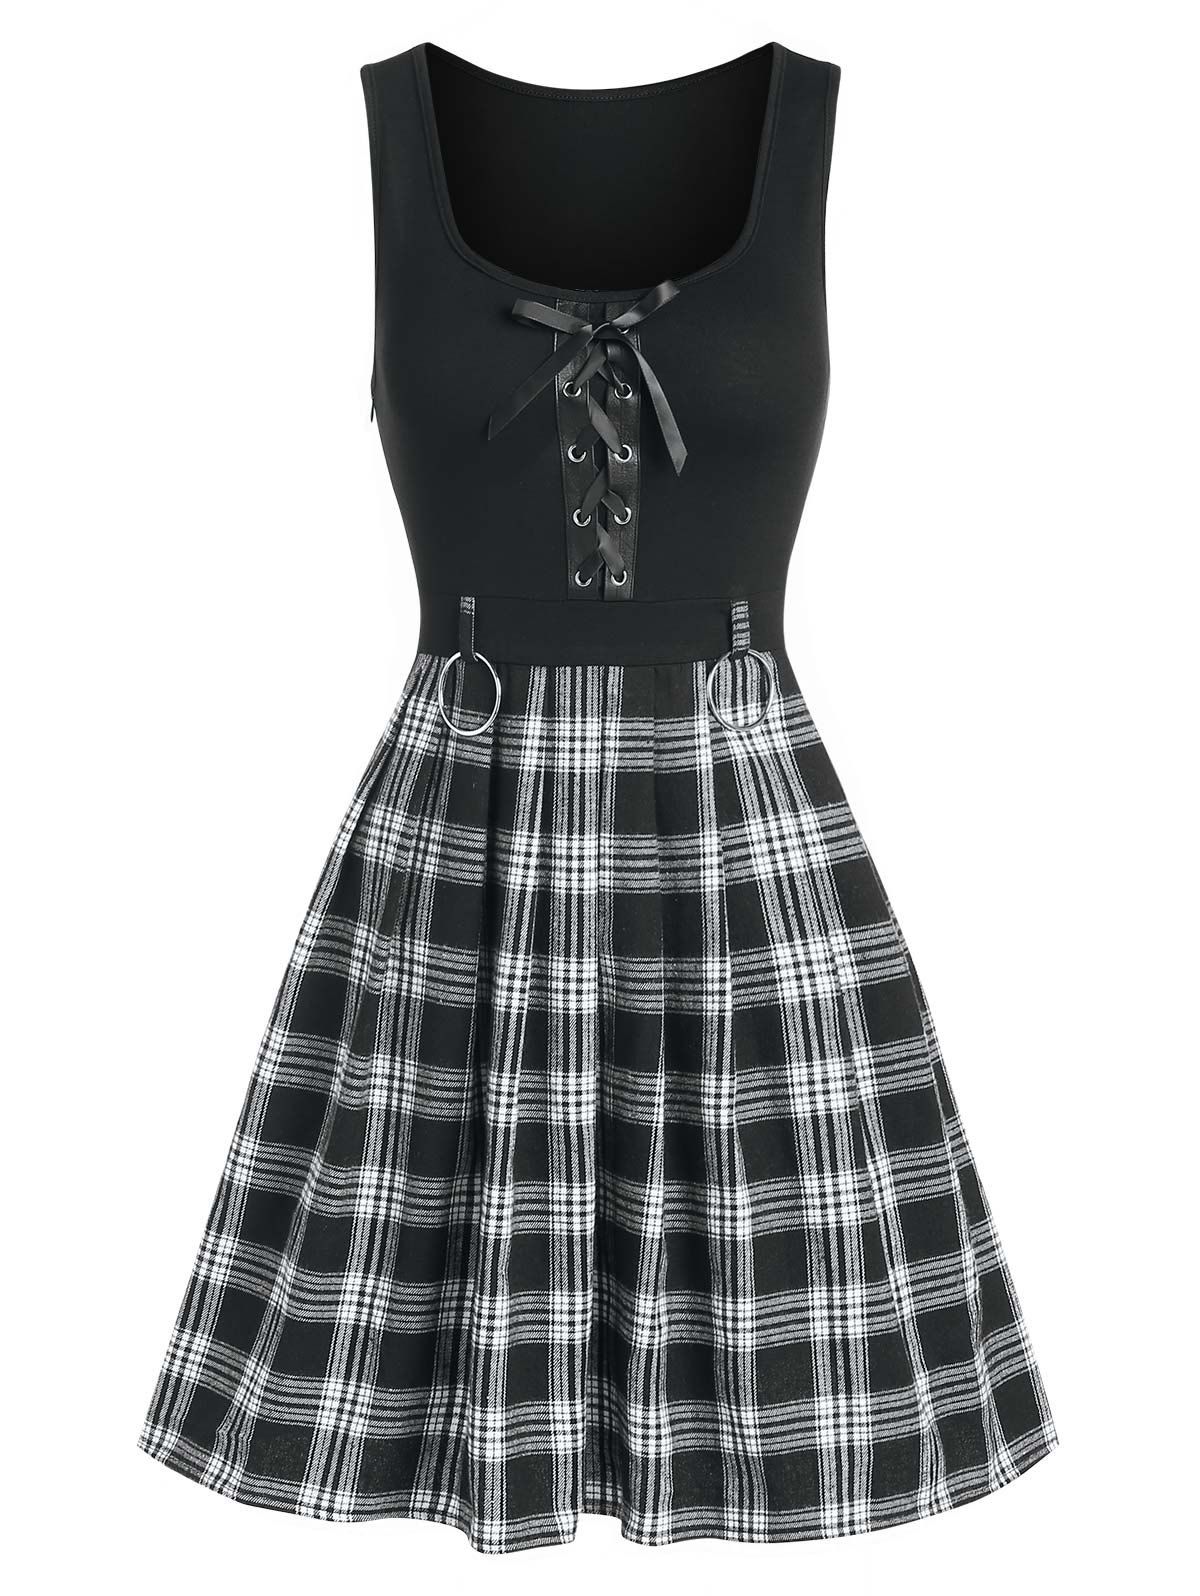 Gothic Lace Up O Ring Plaid Dress - BLACK XL